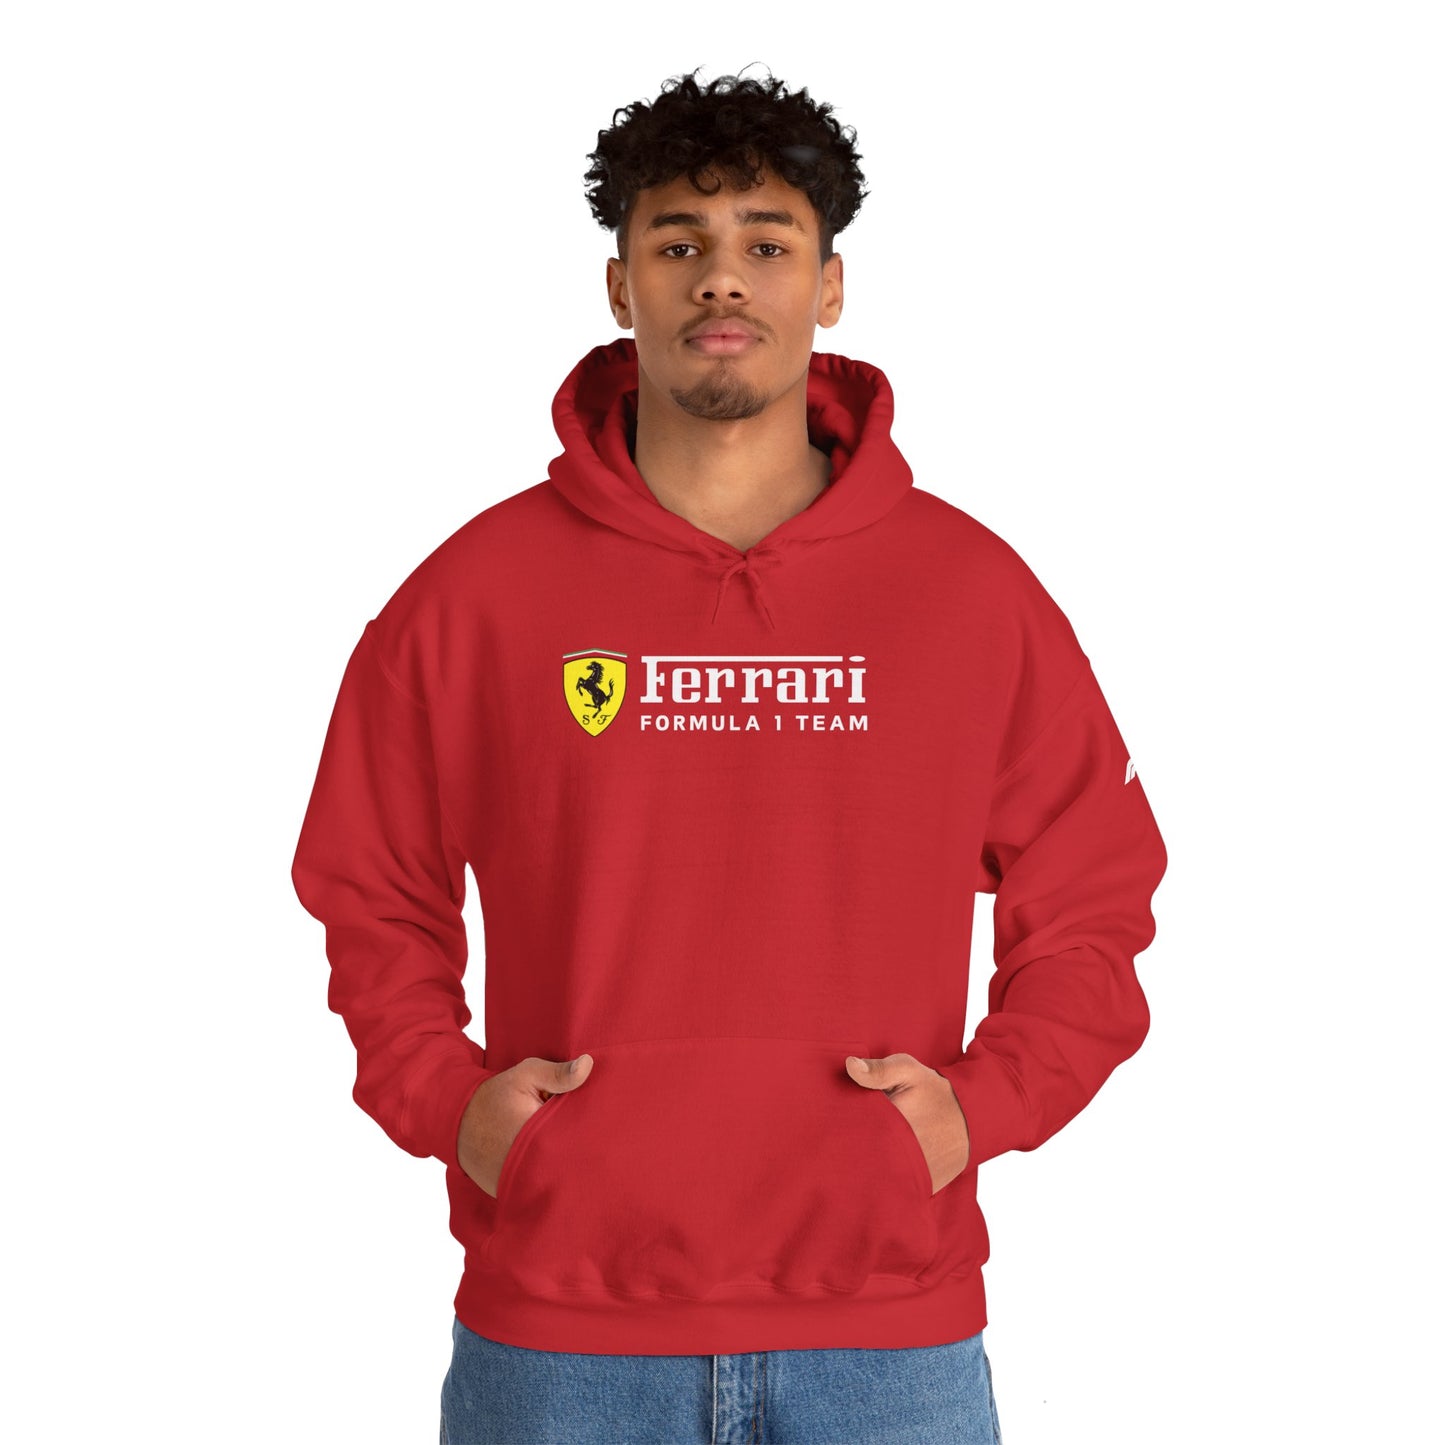 Ferrari Unisex Hoodie Heavy Blend™ - Cozy Comfy Sweatshirt - Classic Scuderia and Formula 1 Team - Gift for a Car Enthusiast - White Logos